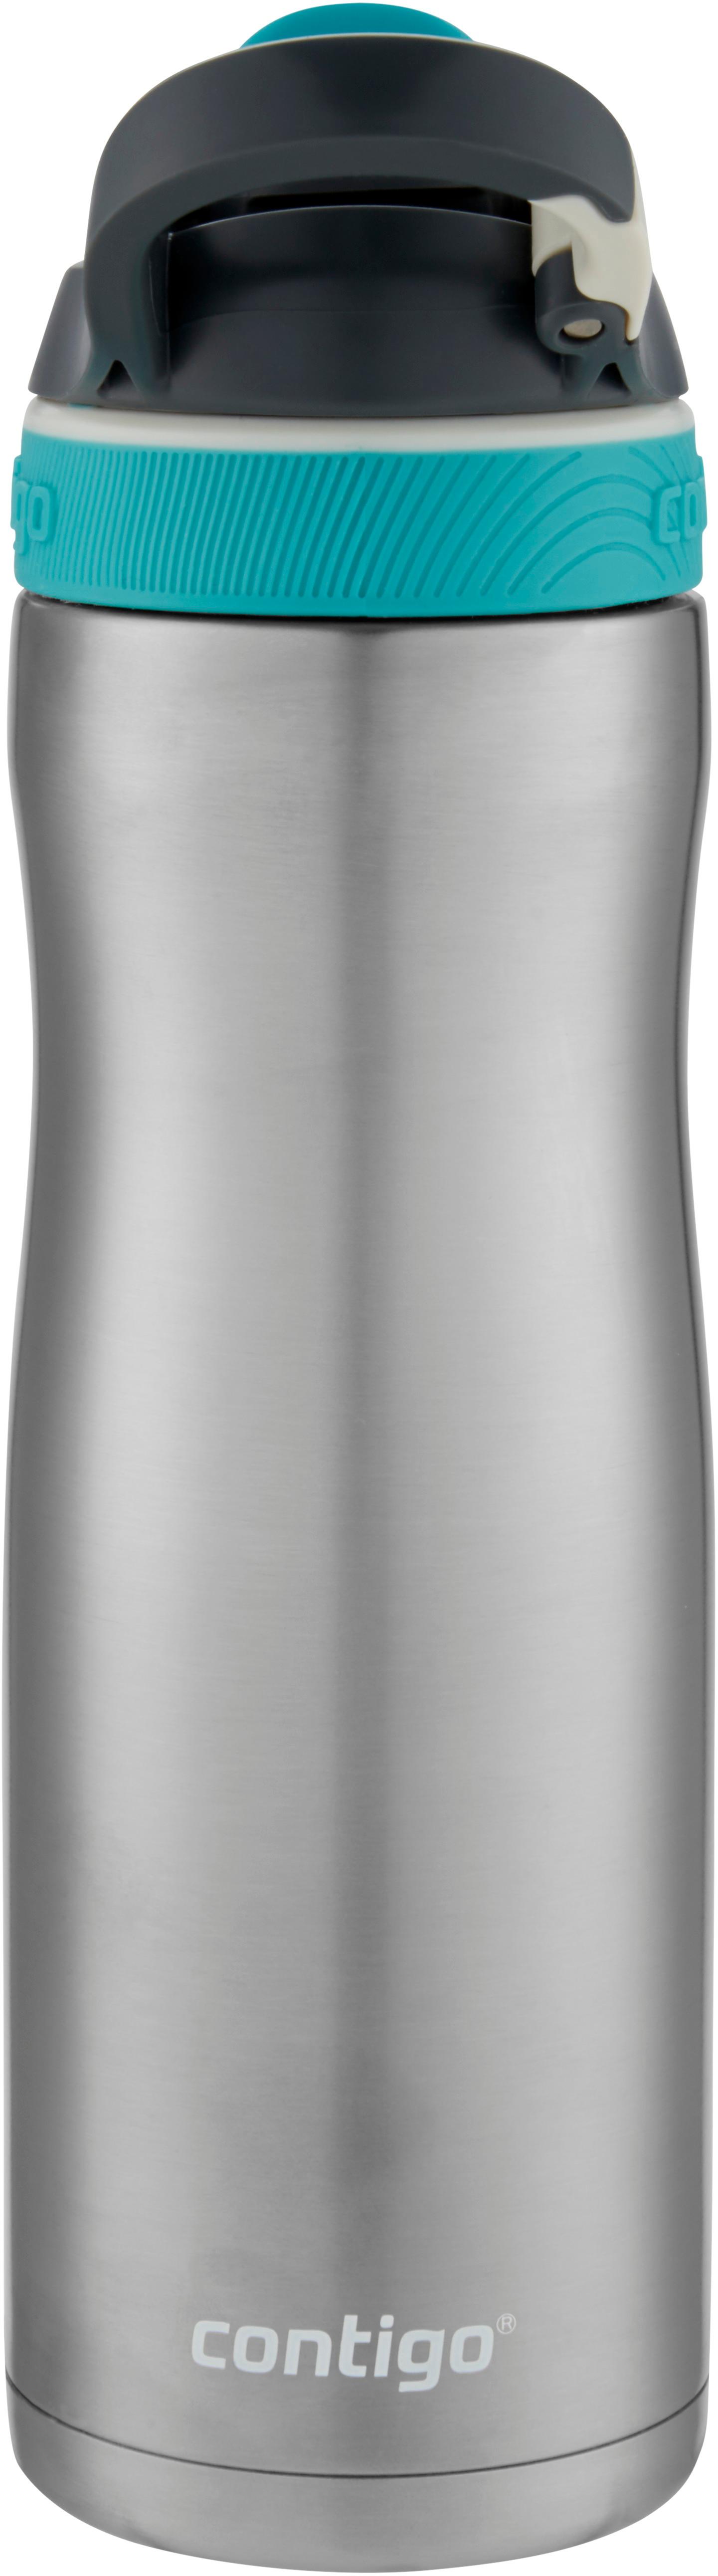 Contigo Autoseal Chill Stainless Steel Water Bottle, 24 Oz., Scuba